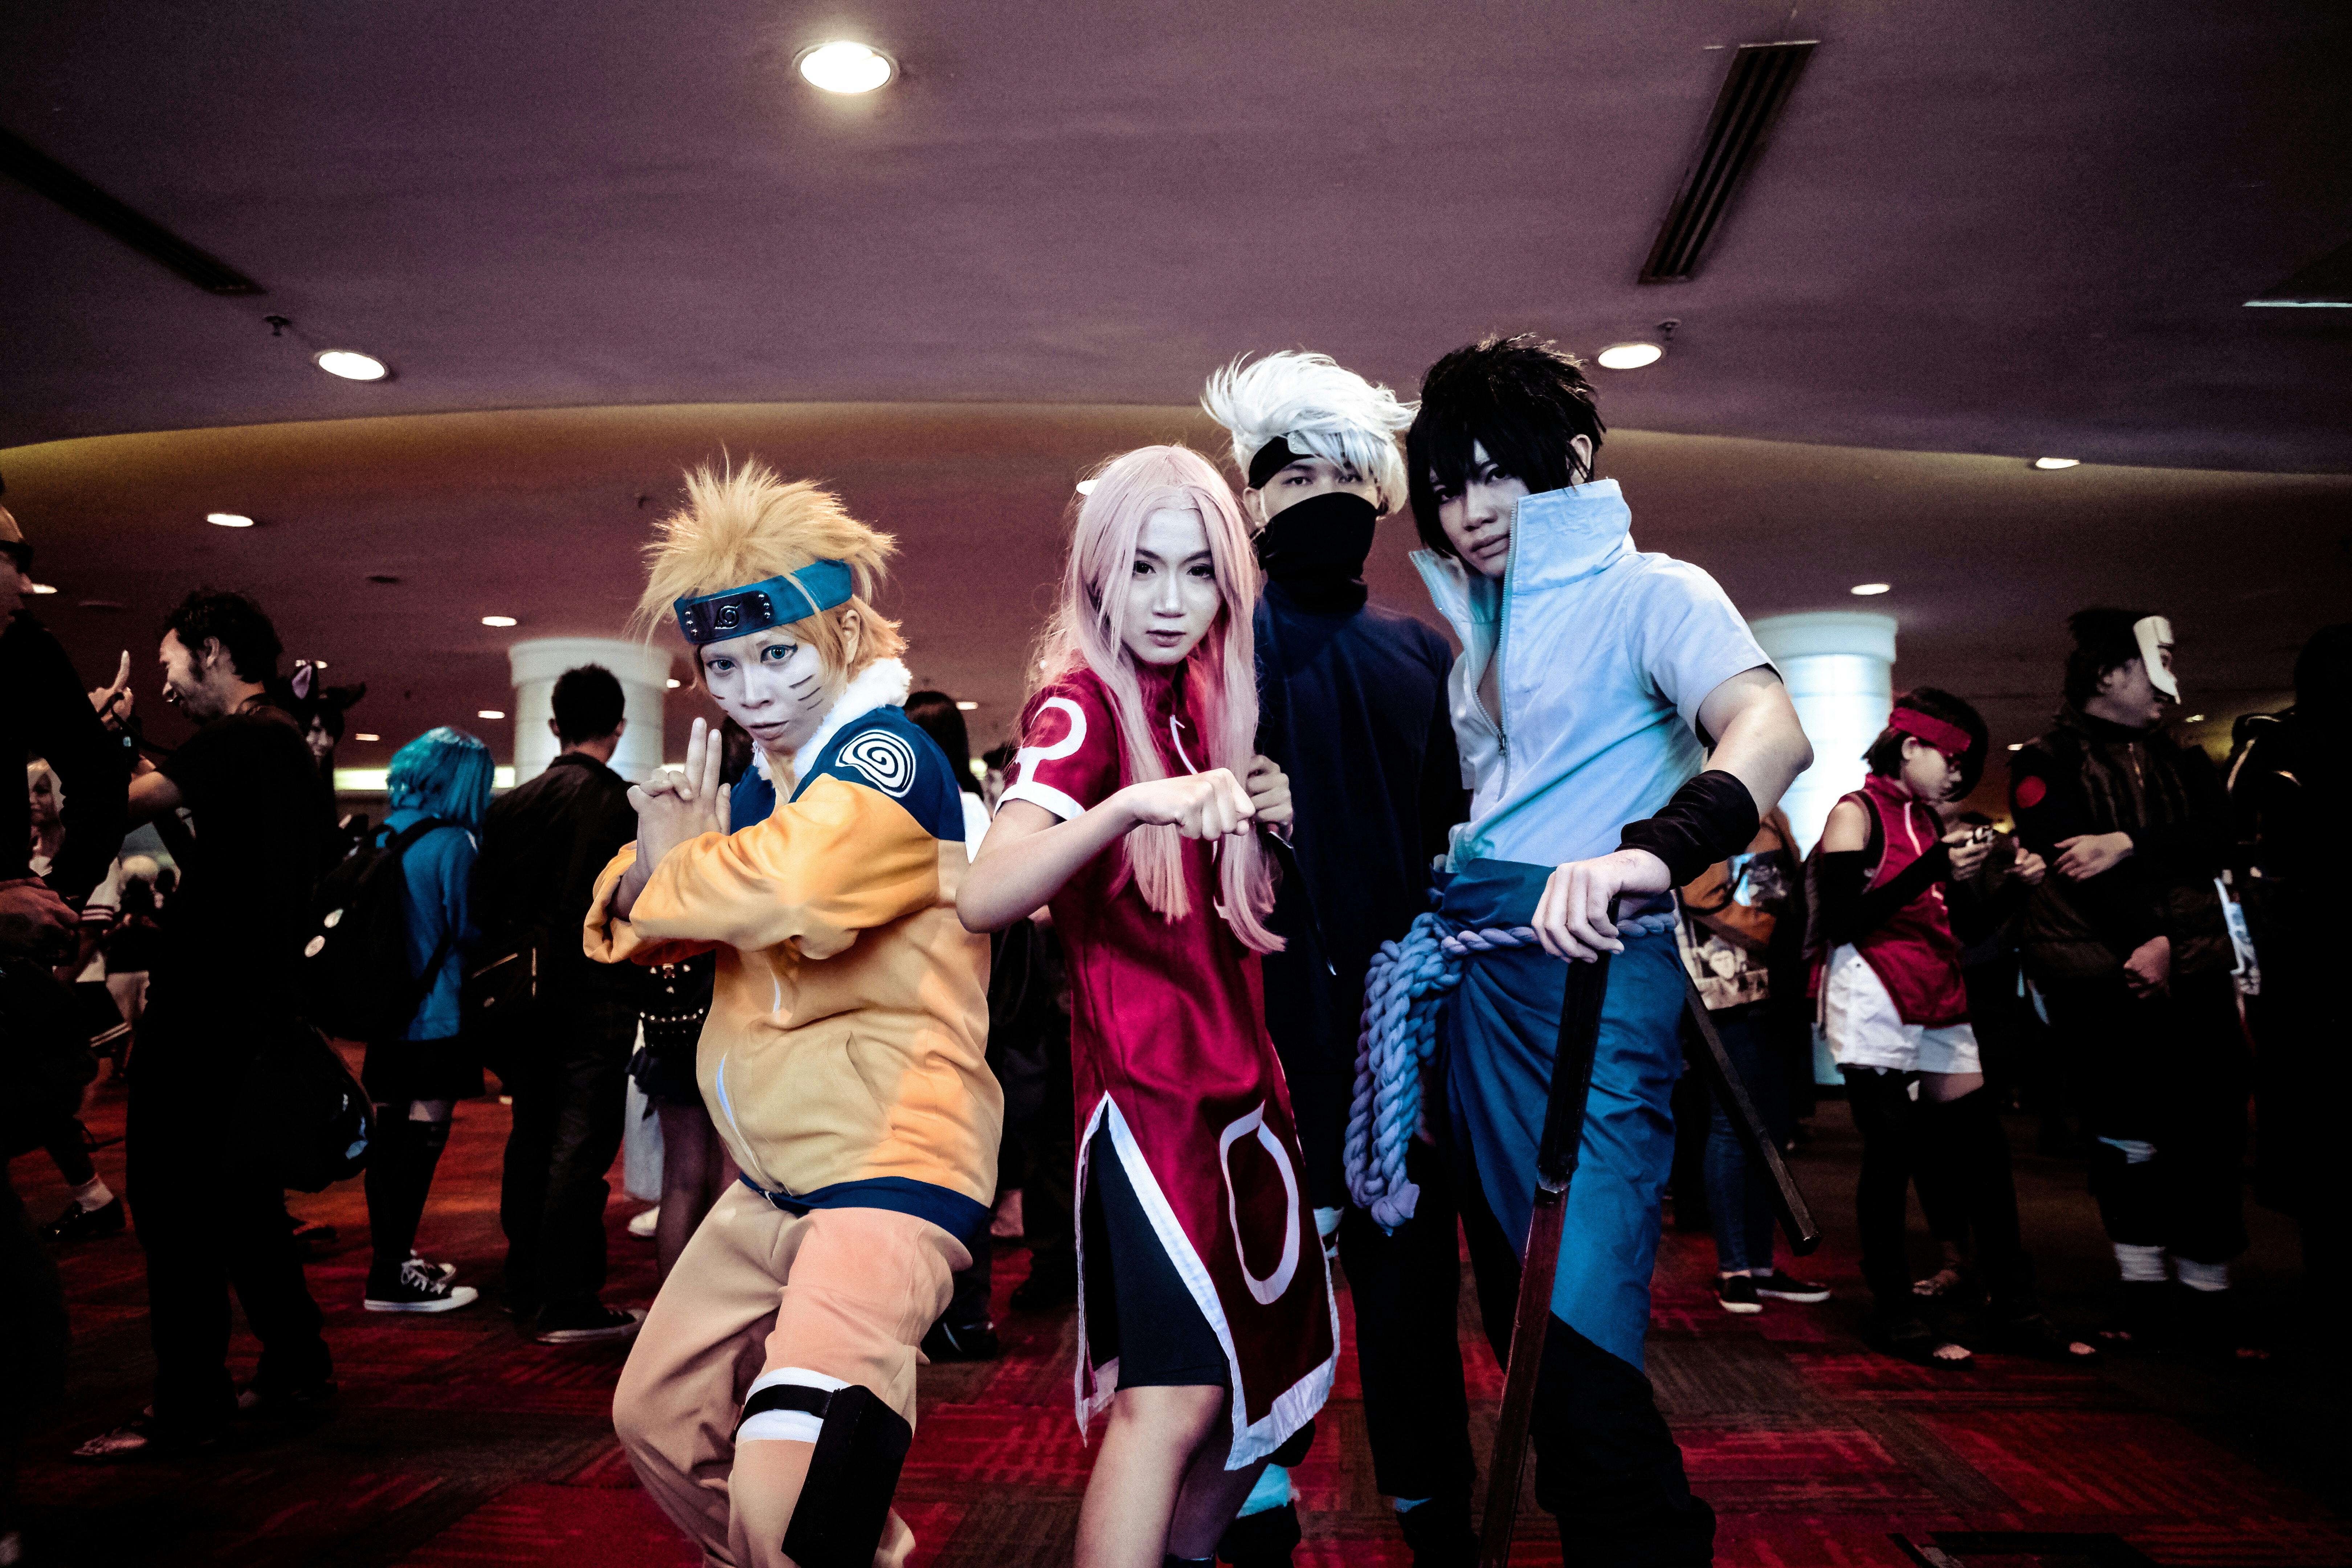 Naruto group cosplay